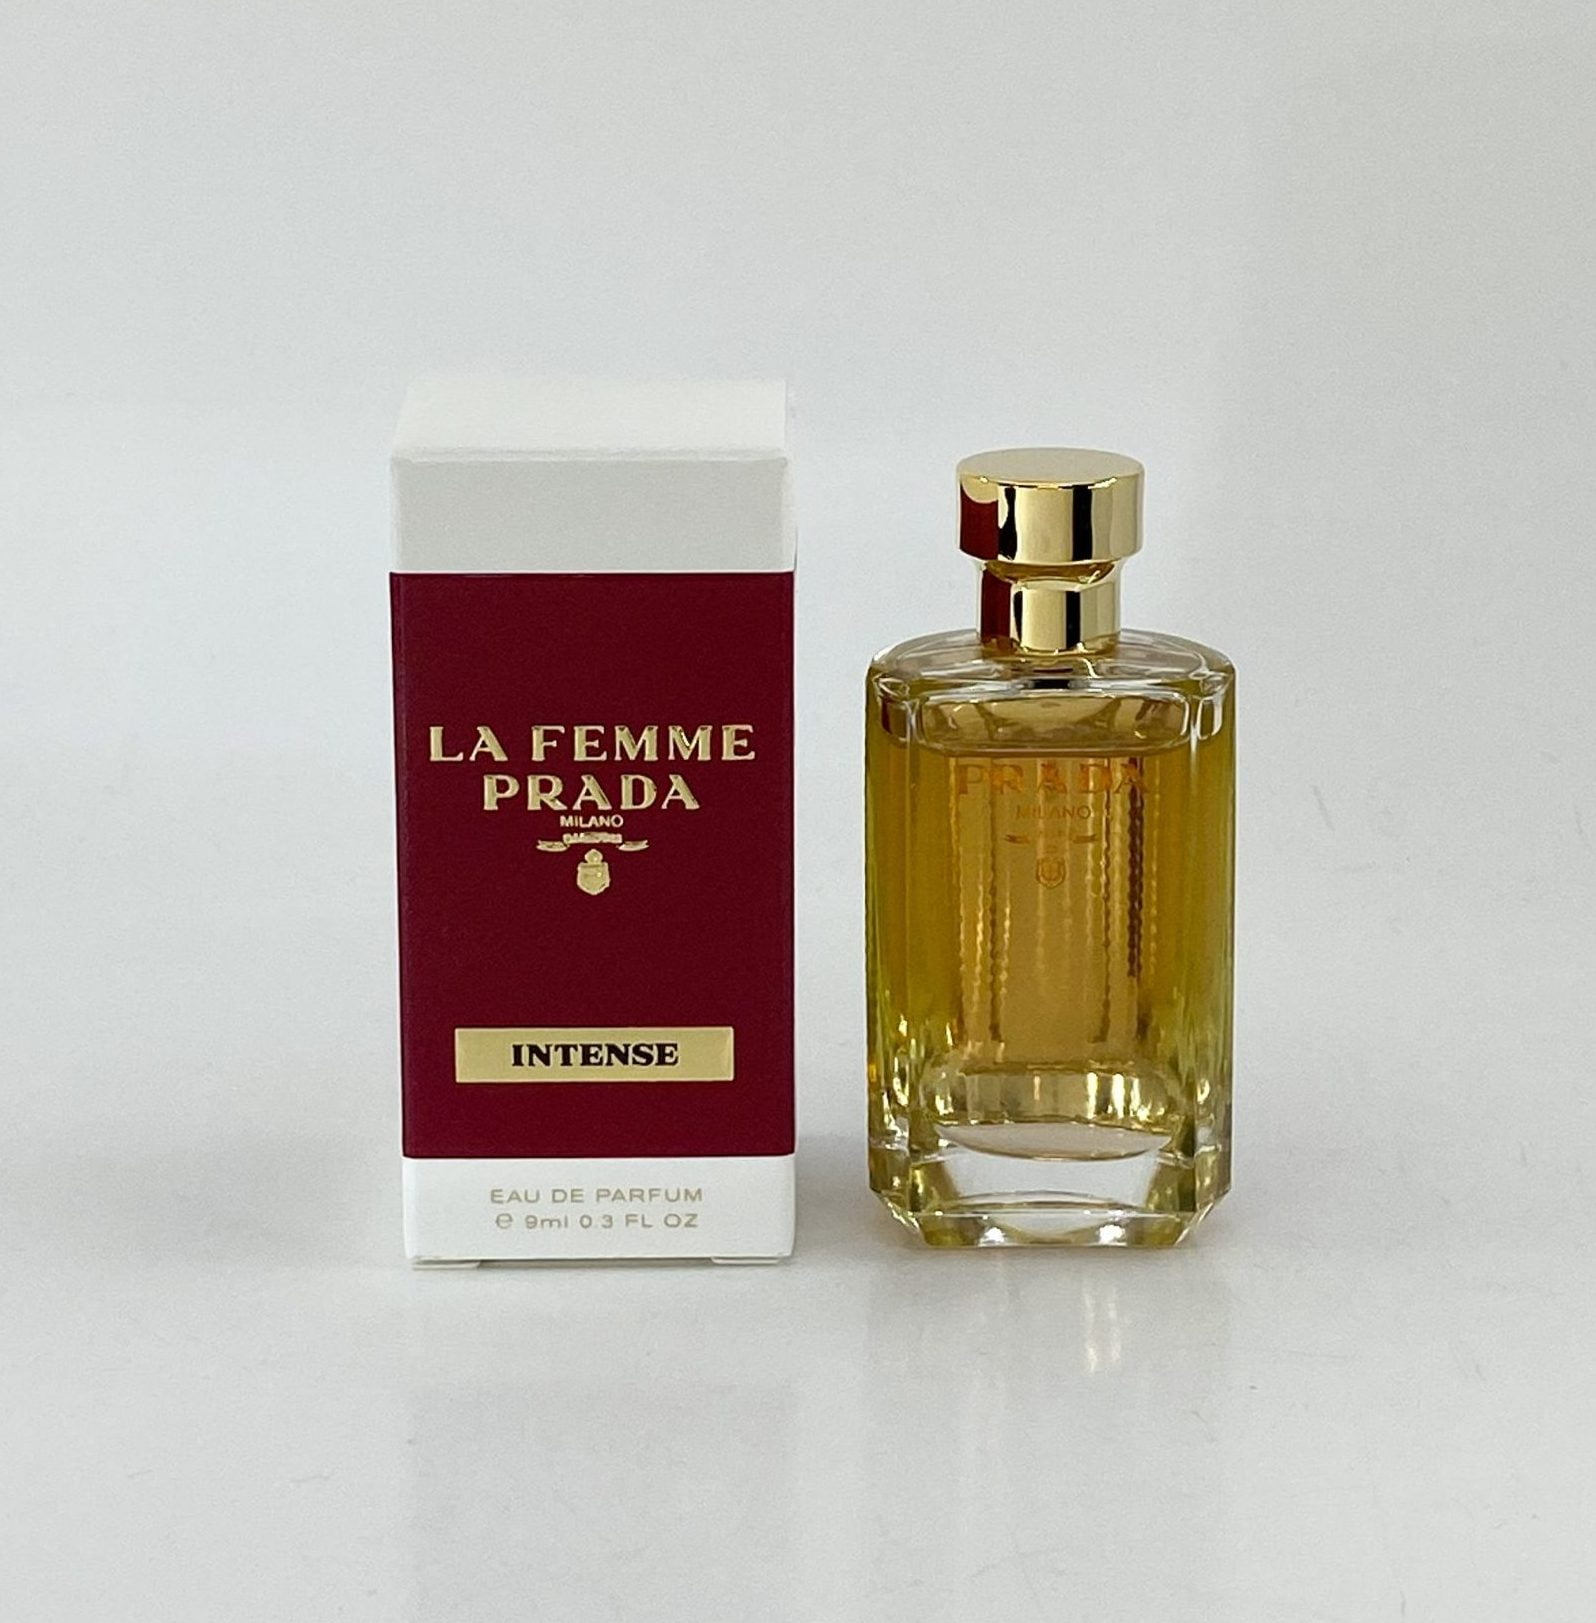 La Femme by Prada » Reviews & Perfume Facts